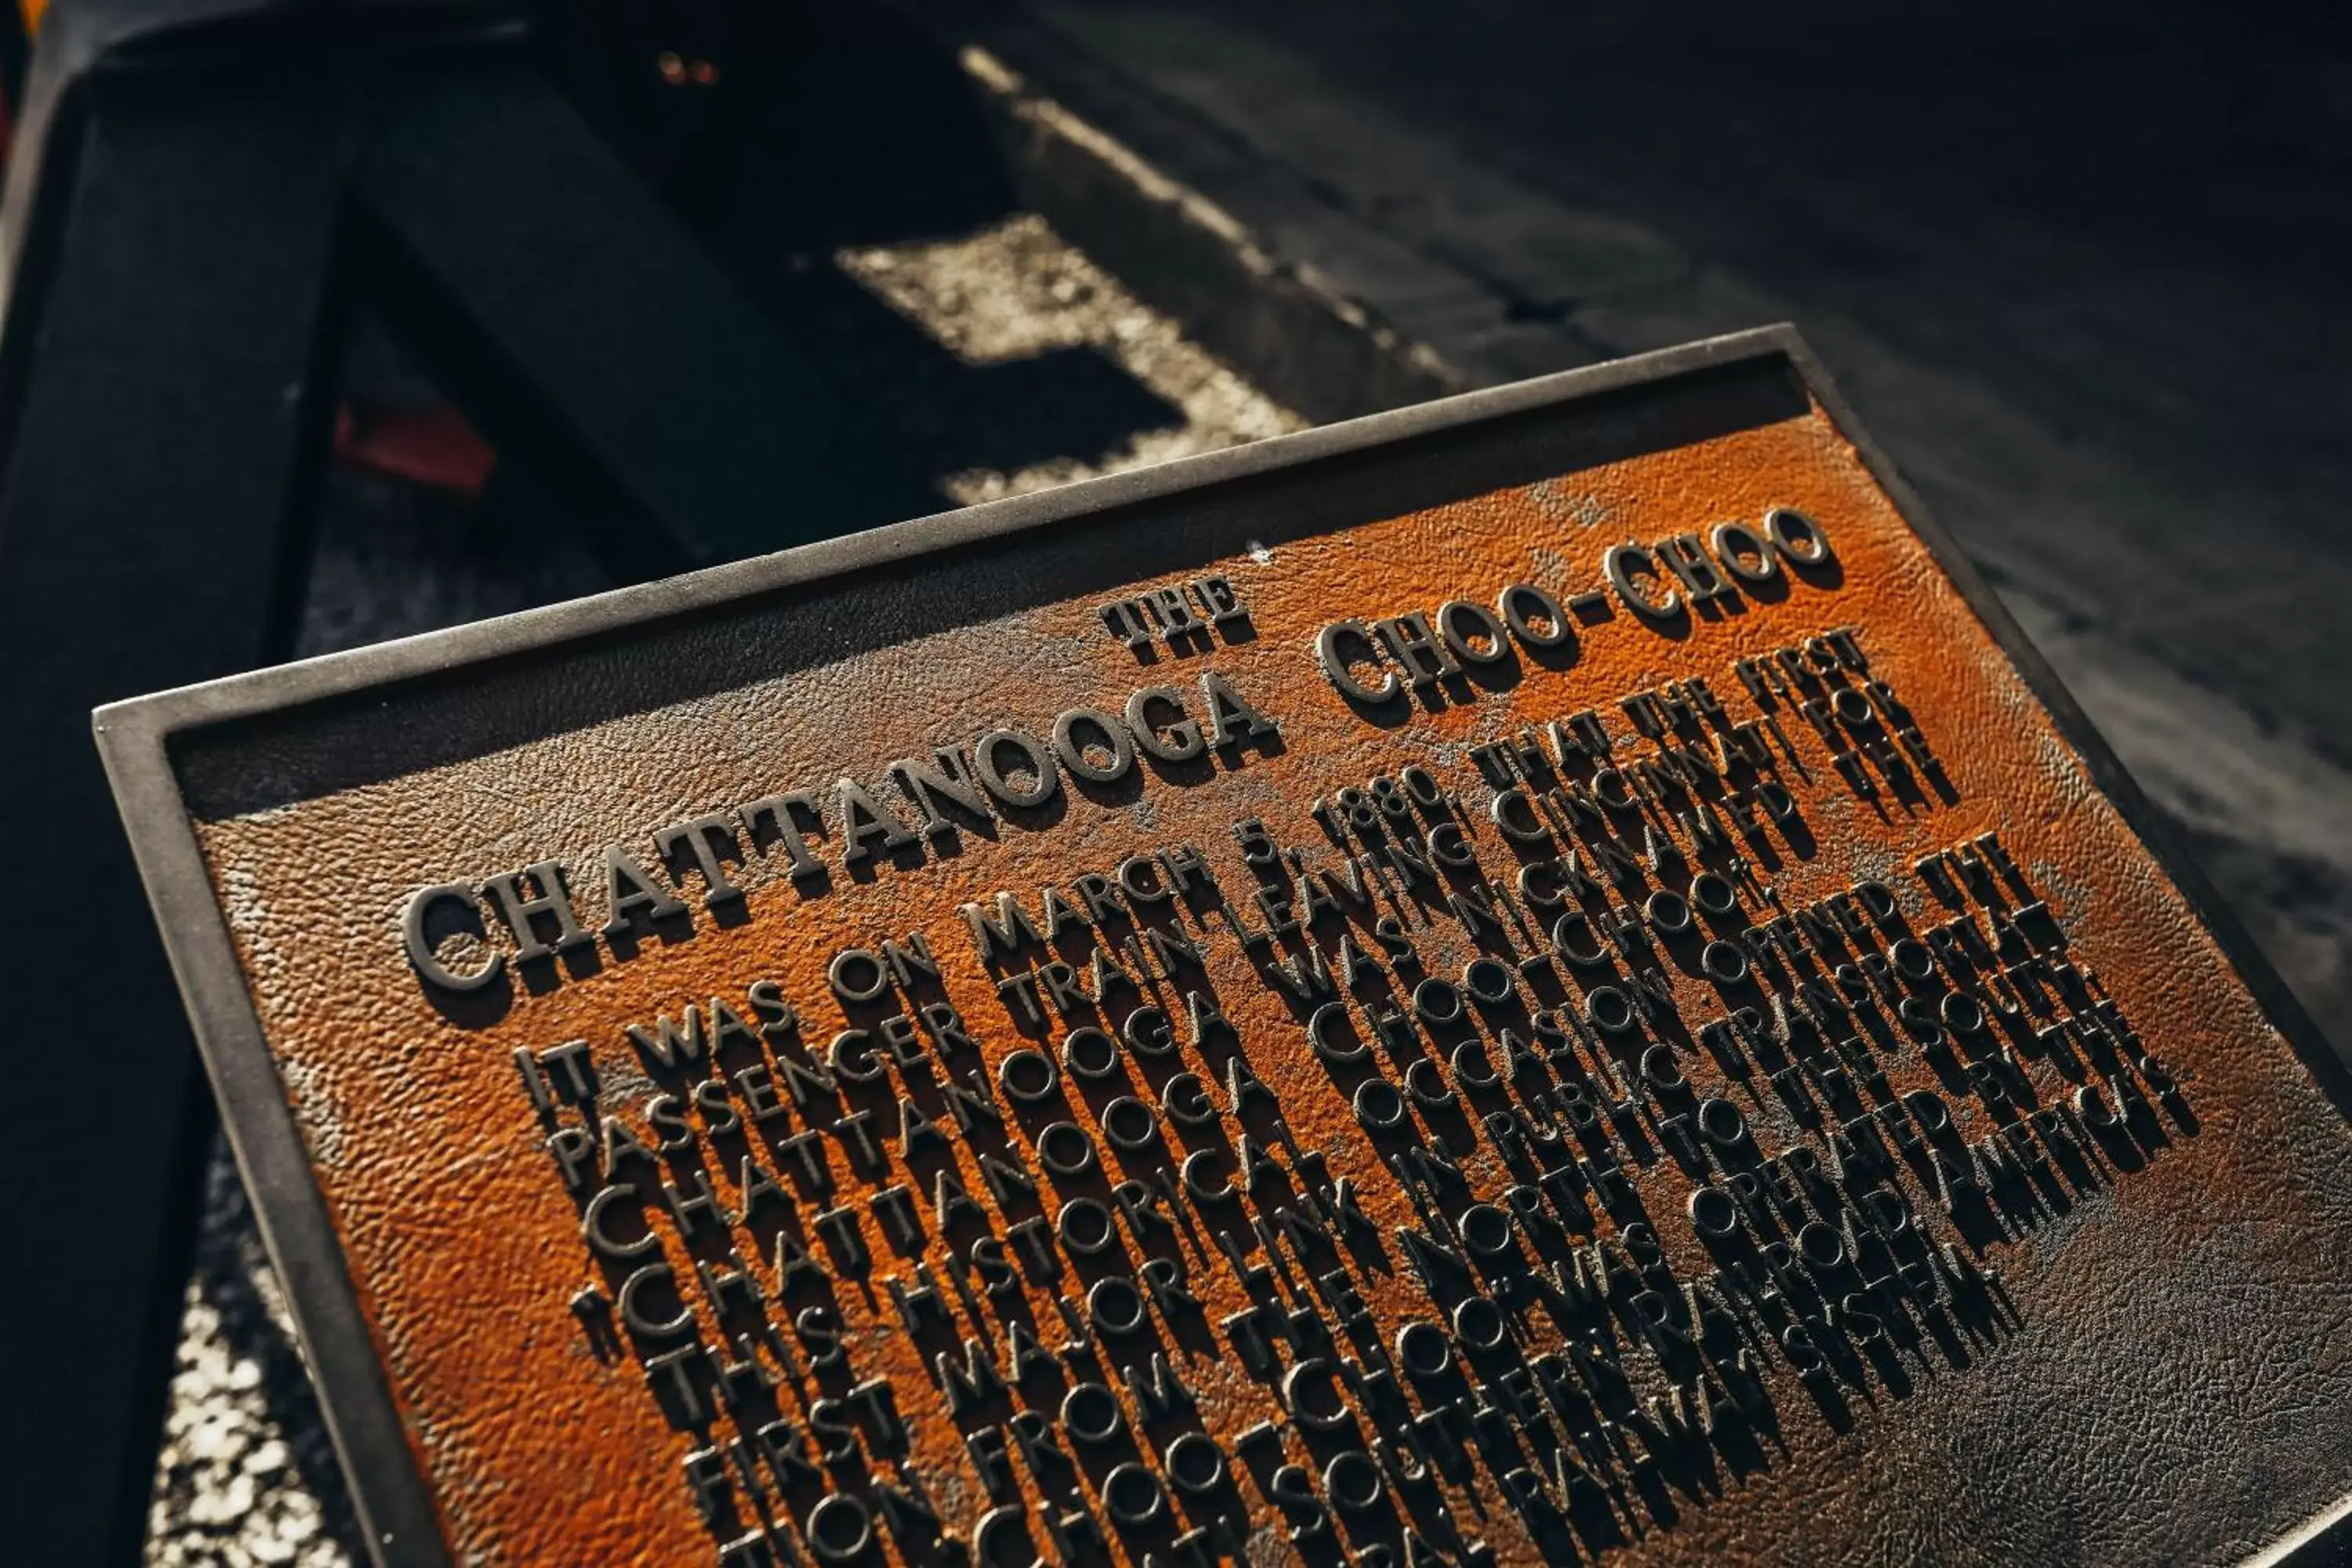 Decorative detail in Chattanooga Choo Choo